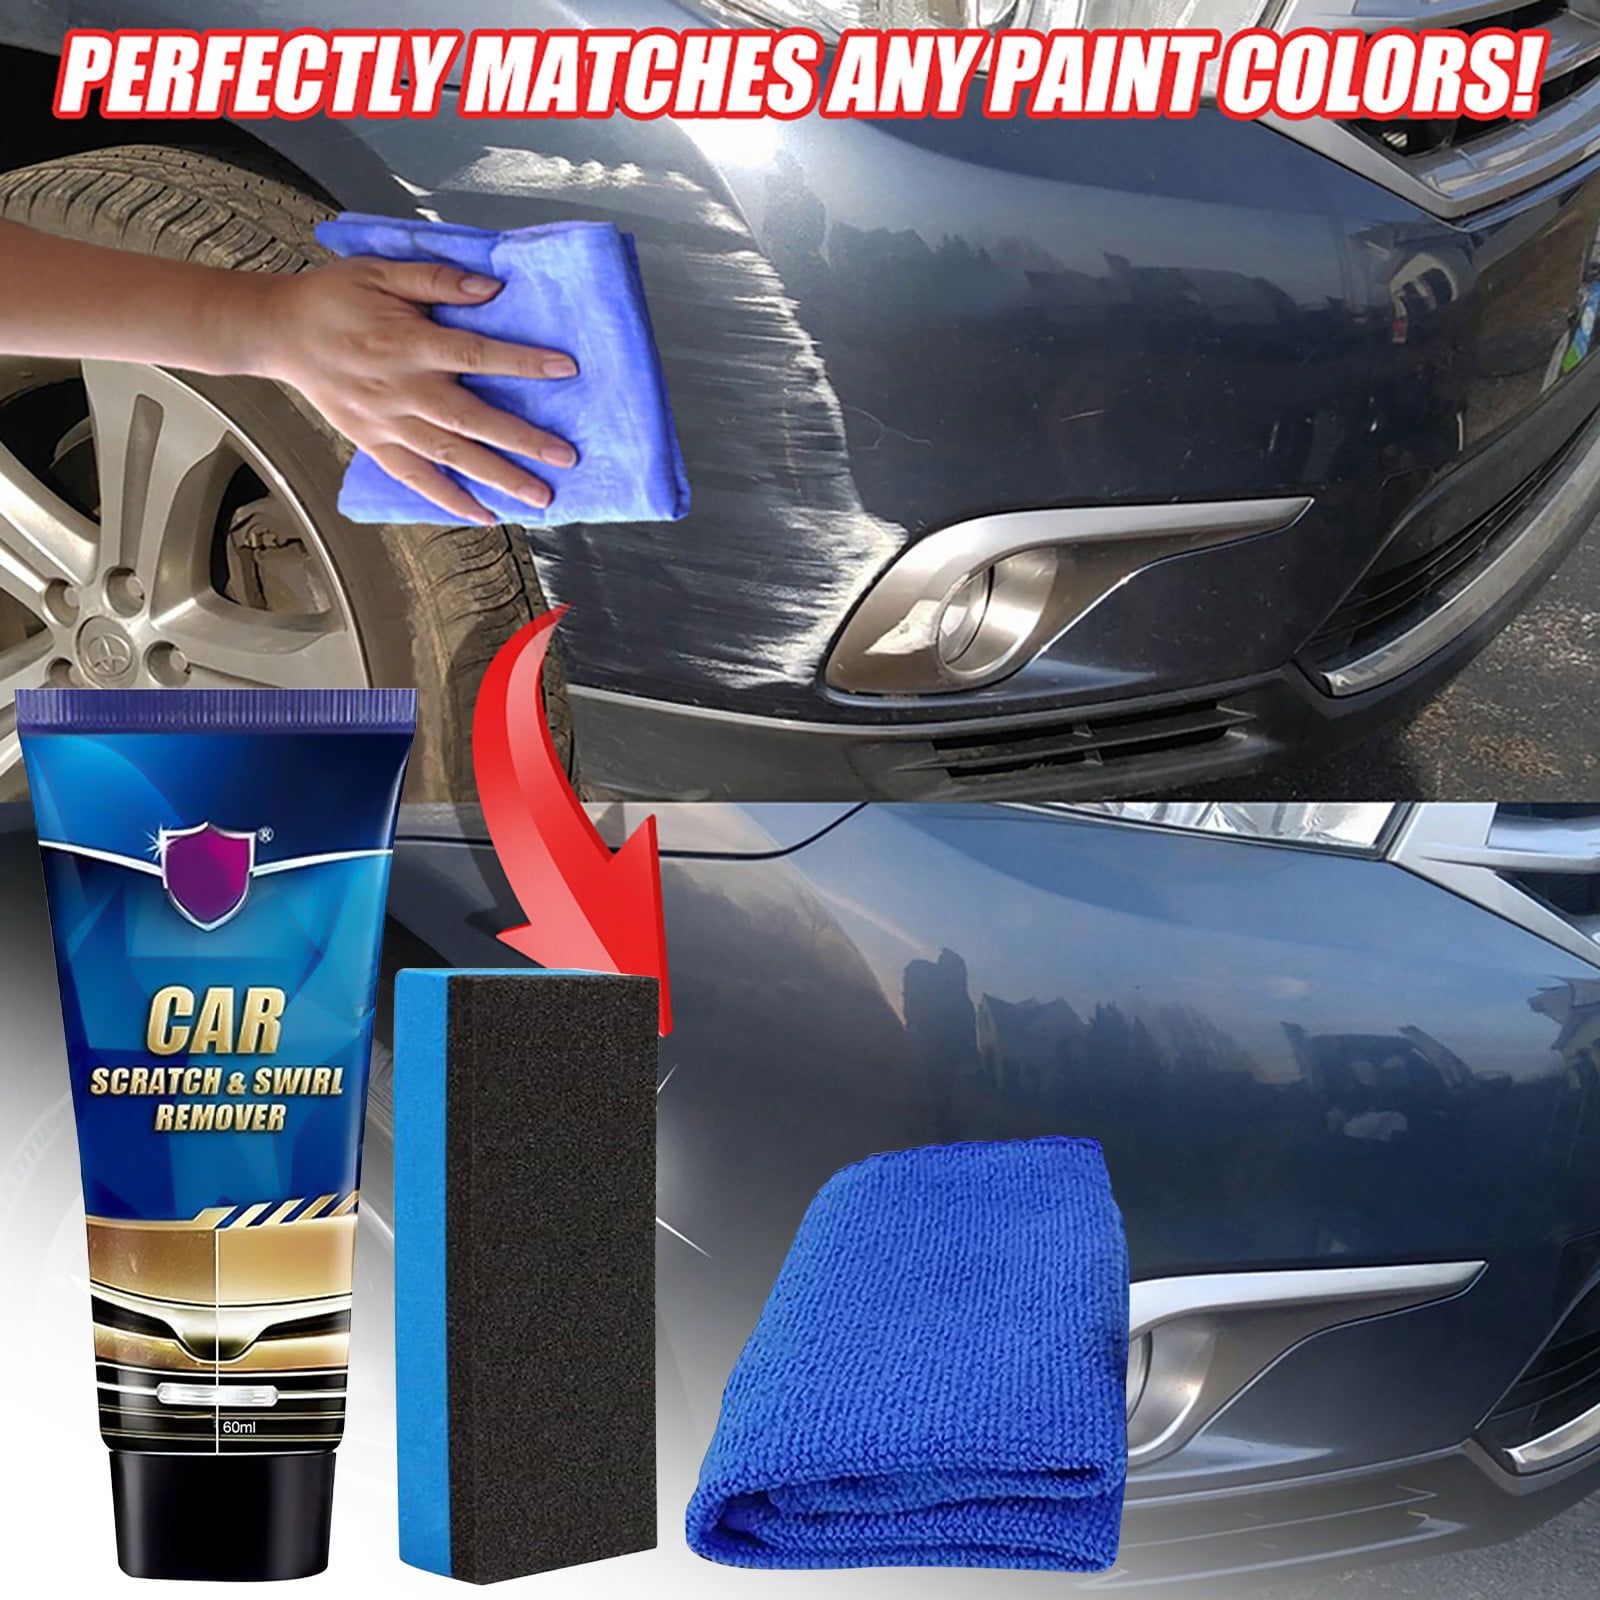 Vntub 3 in 1 High Protection Fast Car Ceramic Coating Spray, Plastic Parts Refurbisher, Fast Fine Scratch Repair, Fast Car Coating, Car Scratch